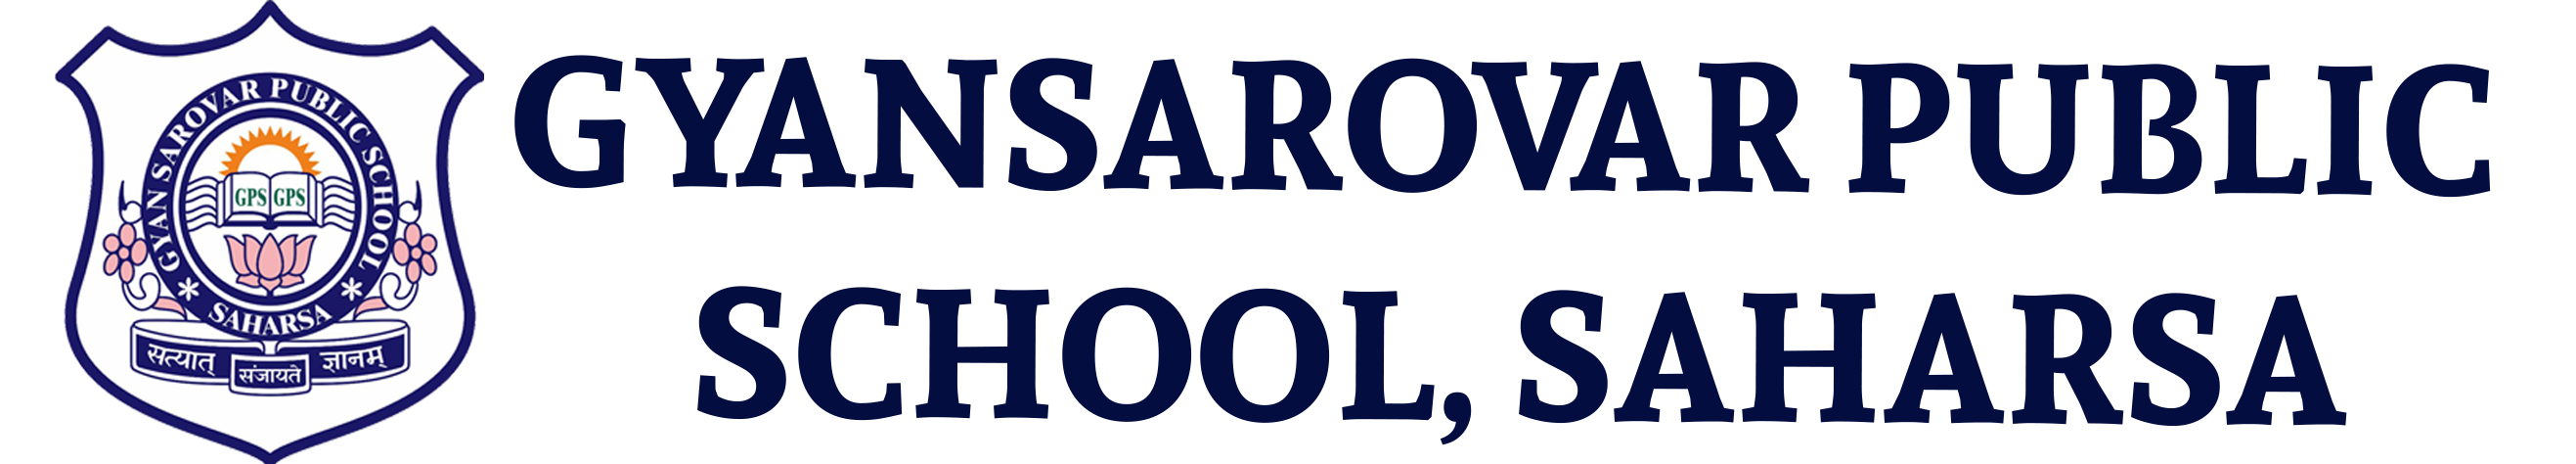 Gyan Sarovar Public School Saharsa Logo